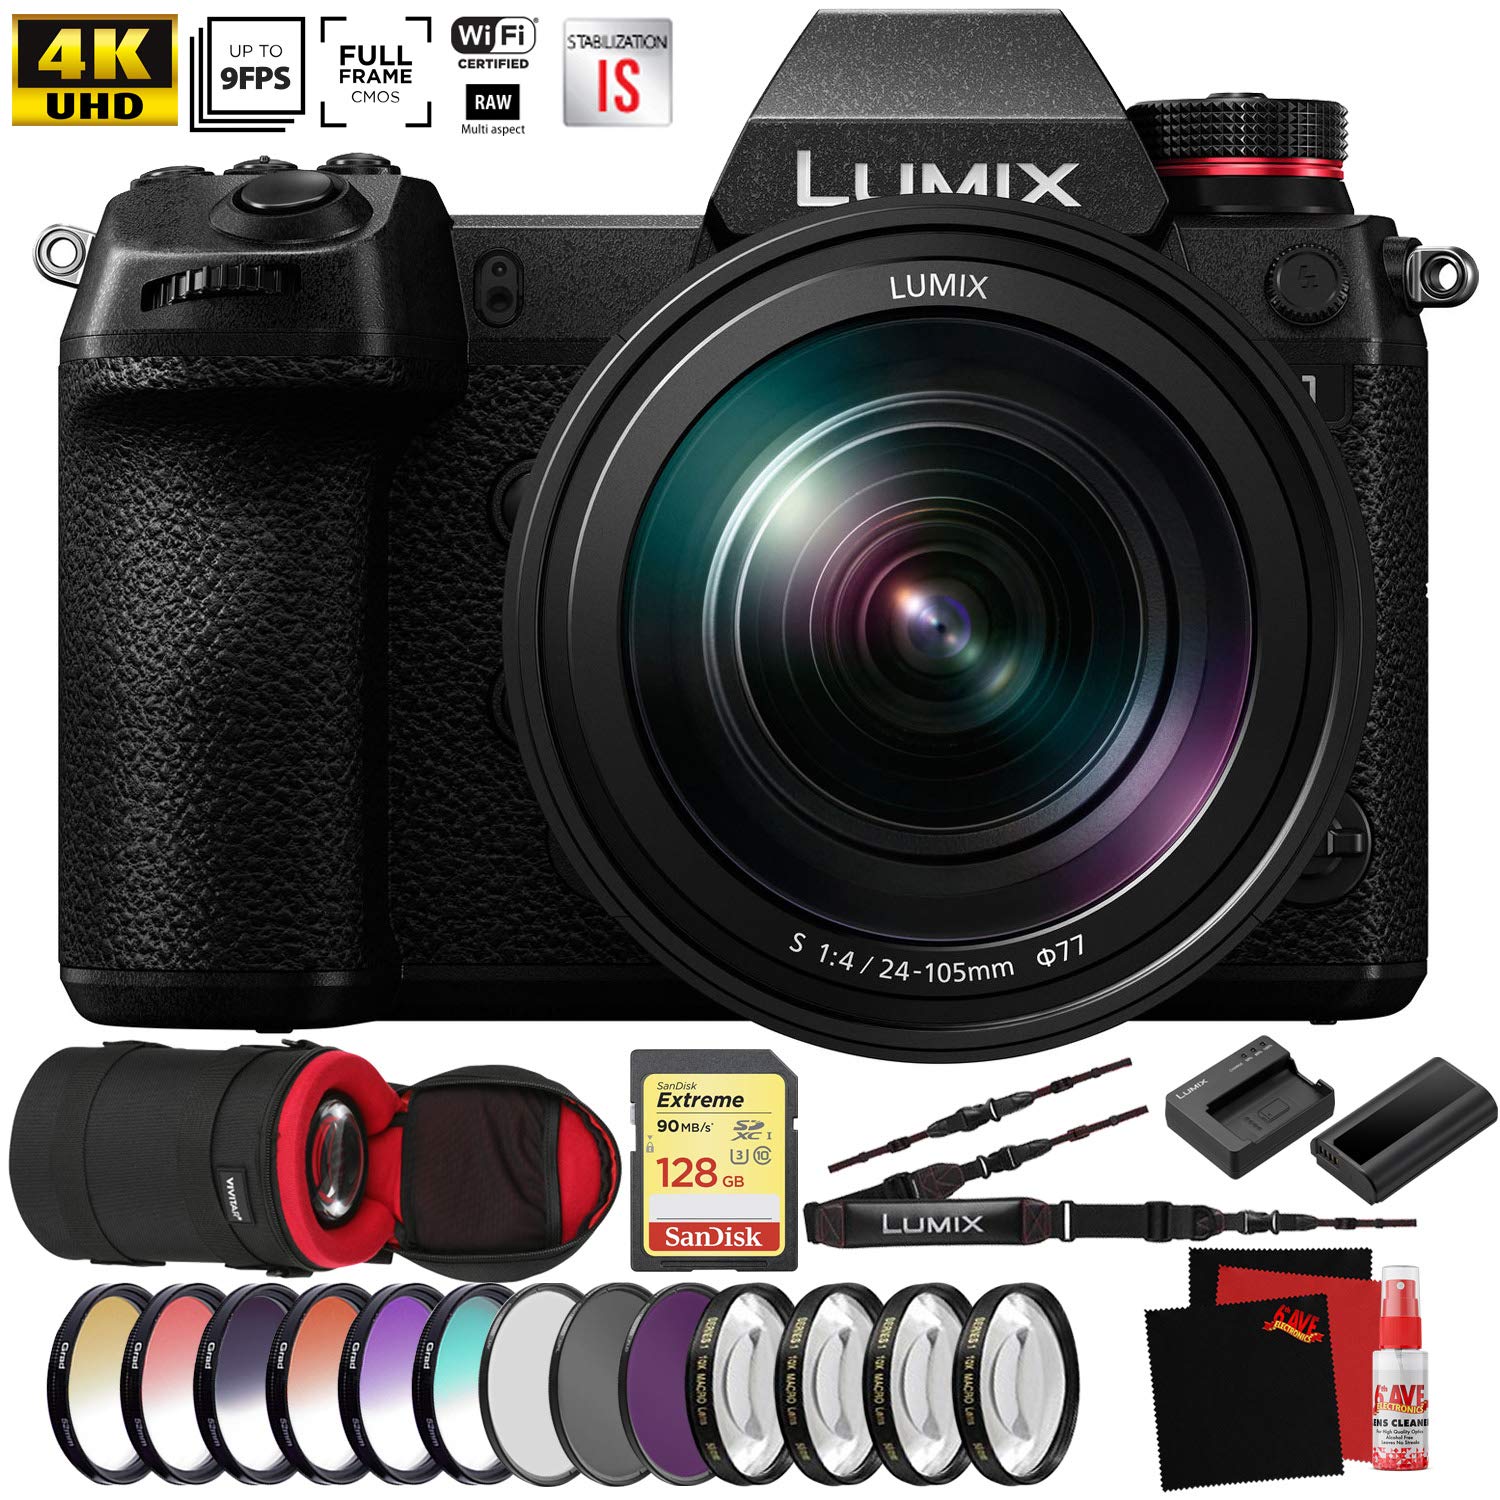 Panasonic Lumix DC-S1 Mirrorless Digital Camera with 24-105mm Lens NEW - Pro Photographer Bundle